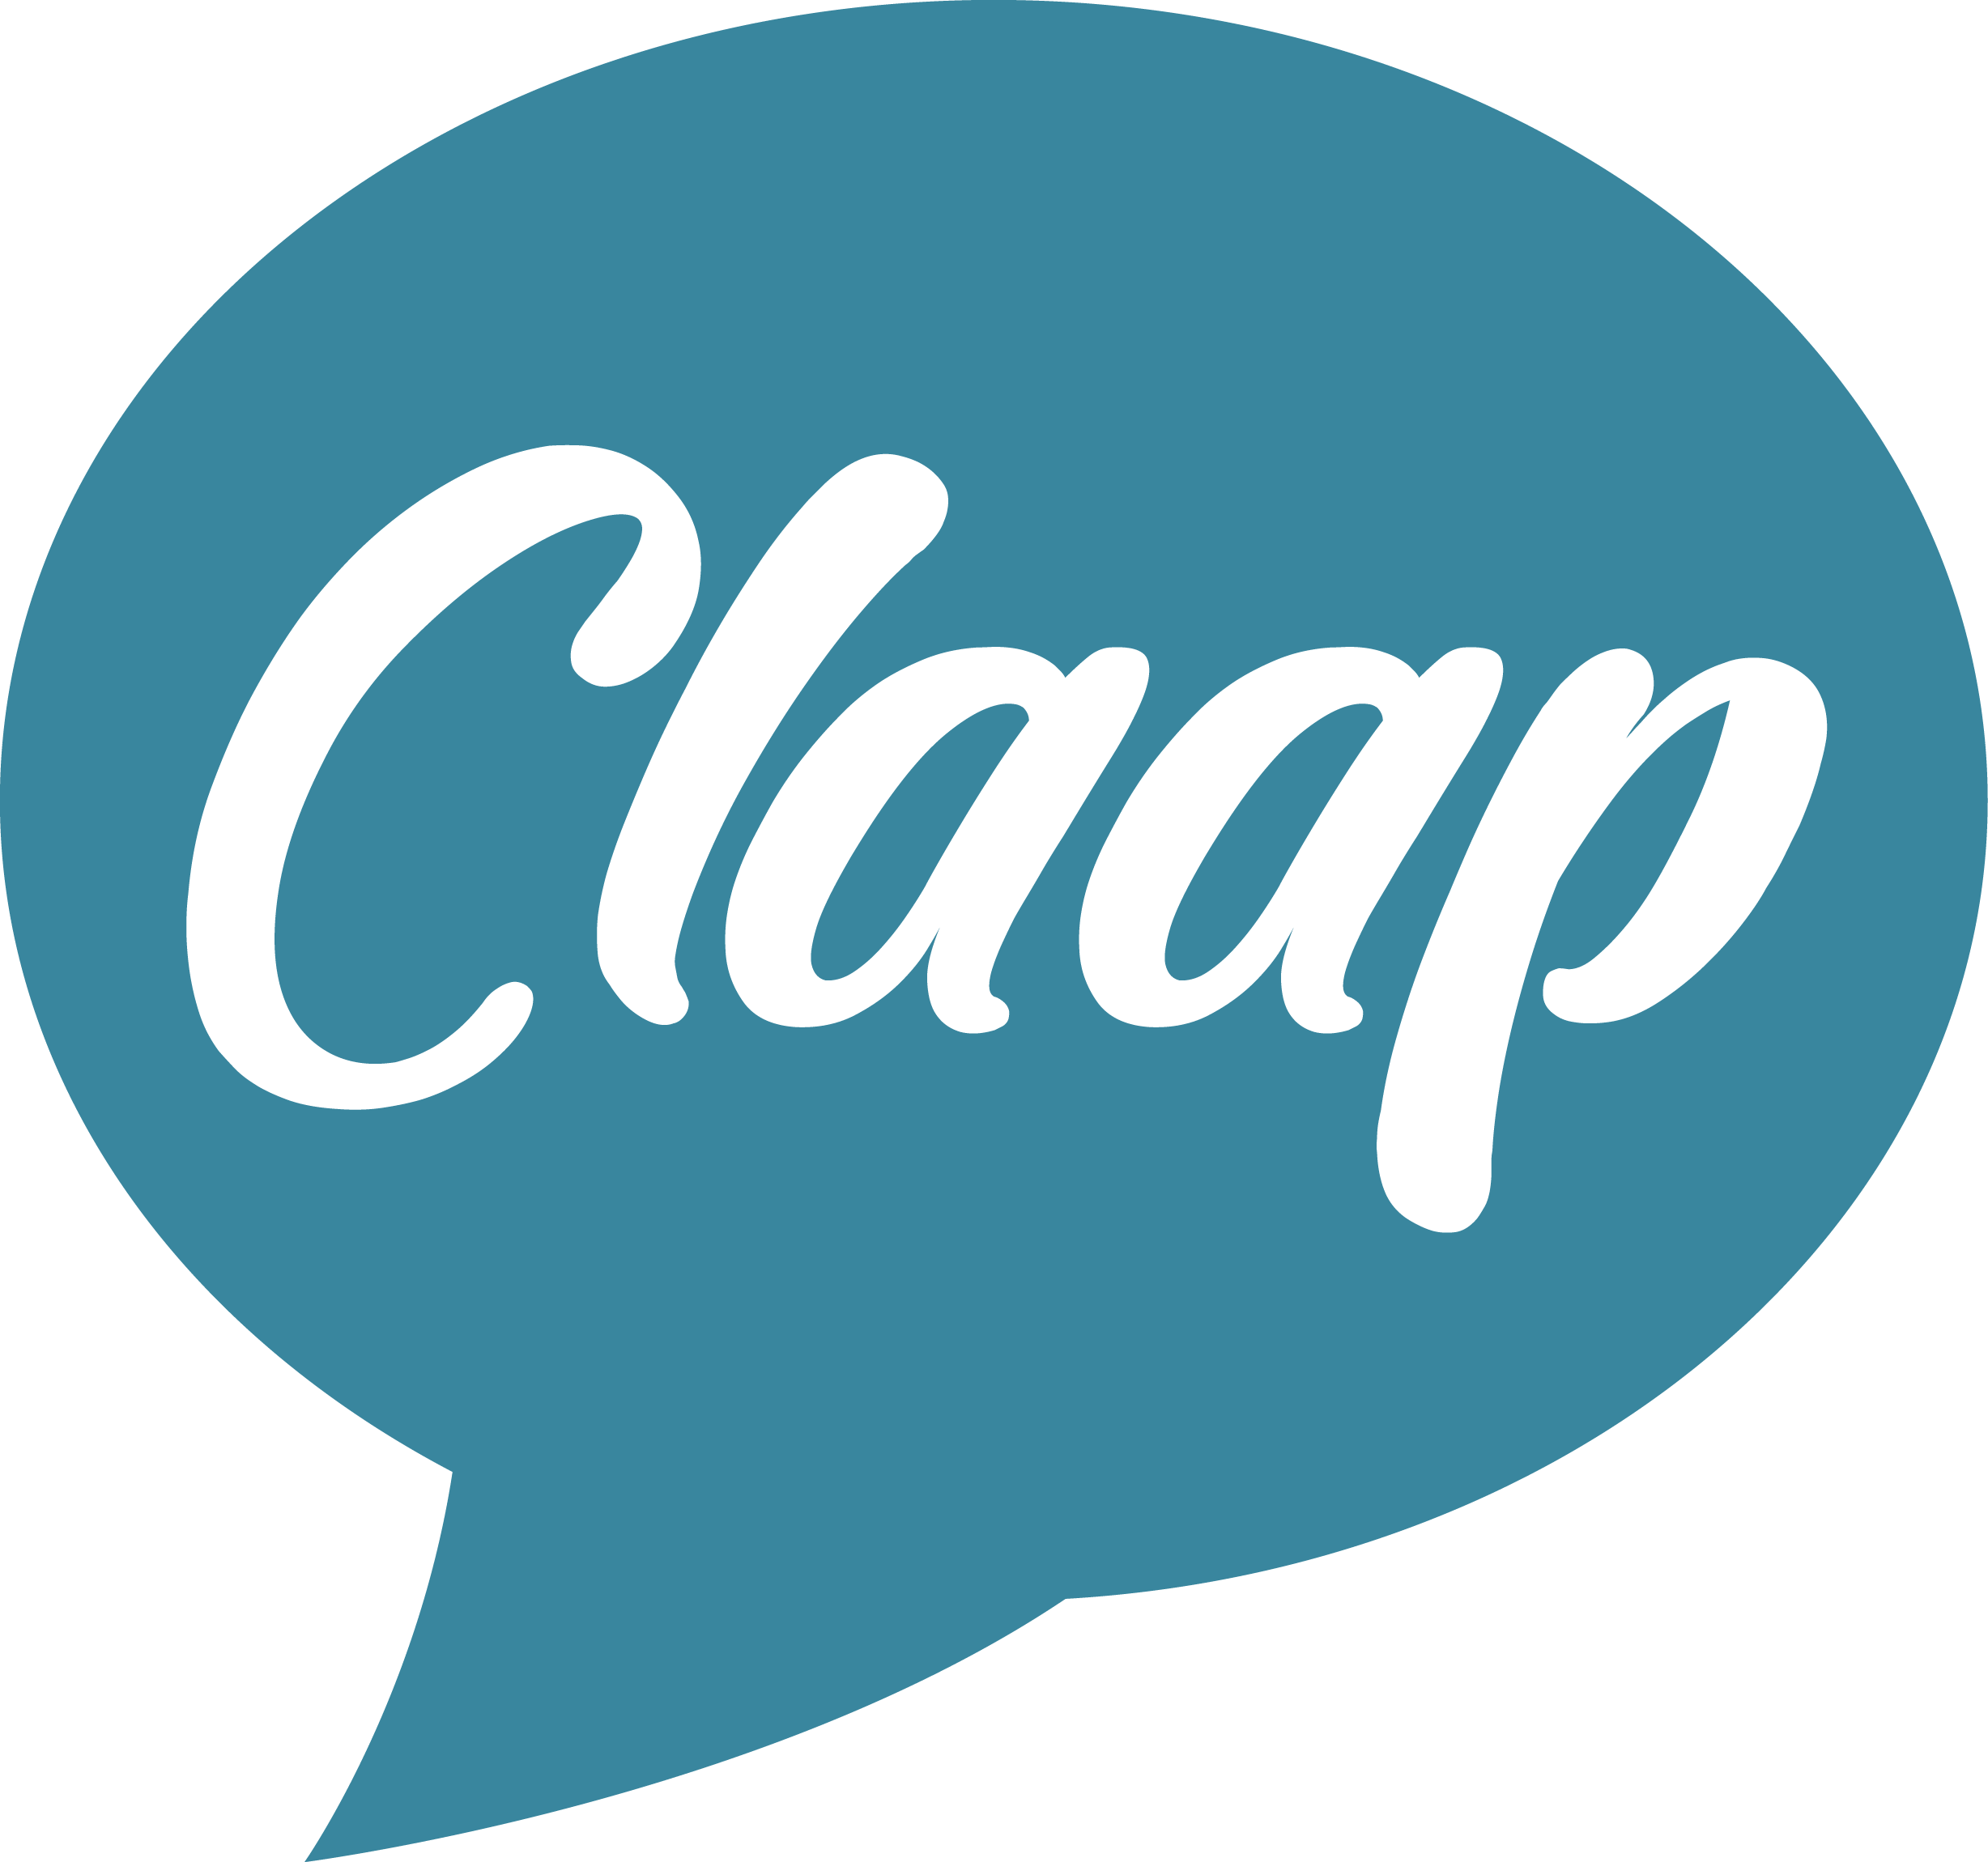 claap logo